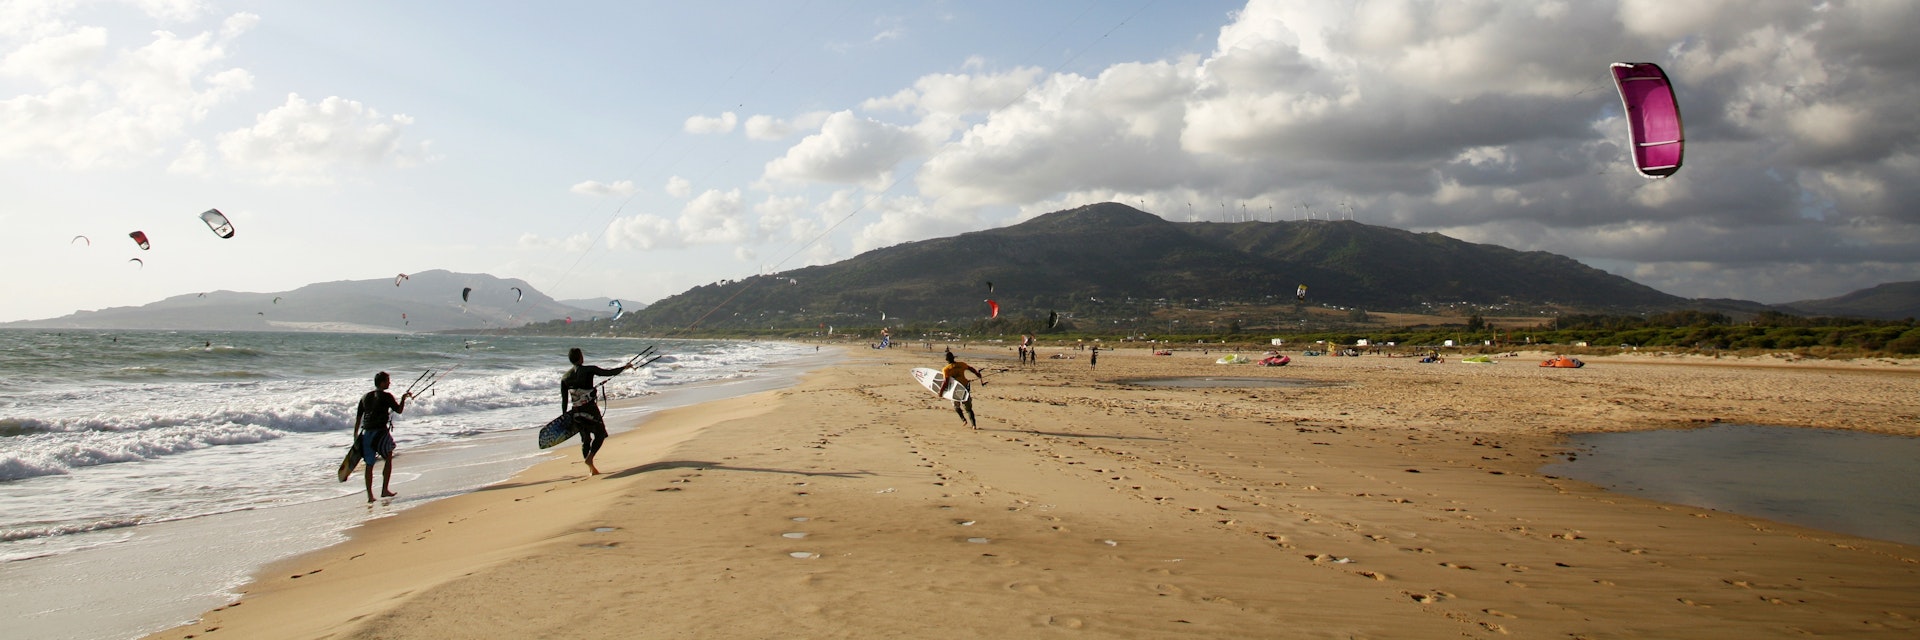 Kite surfers on Playa de los Lances beach, Tarifa, Andalucia, Spain.